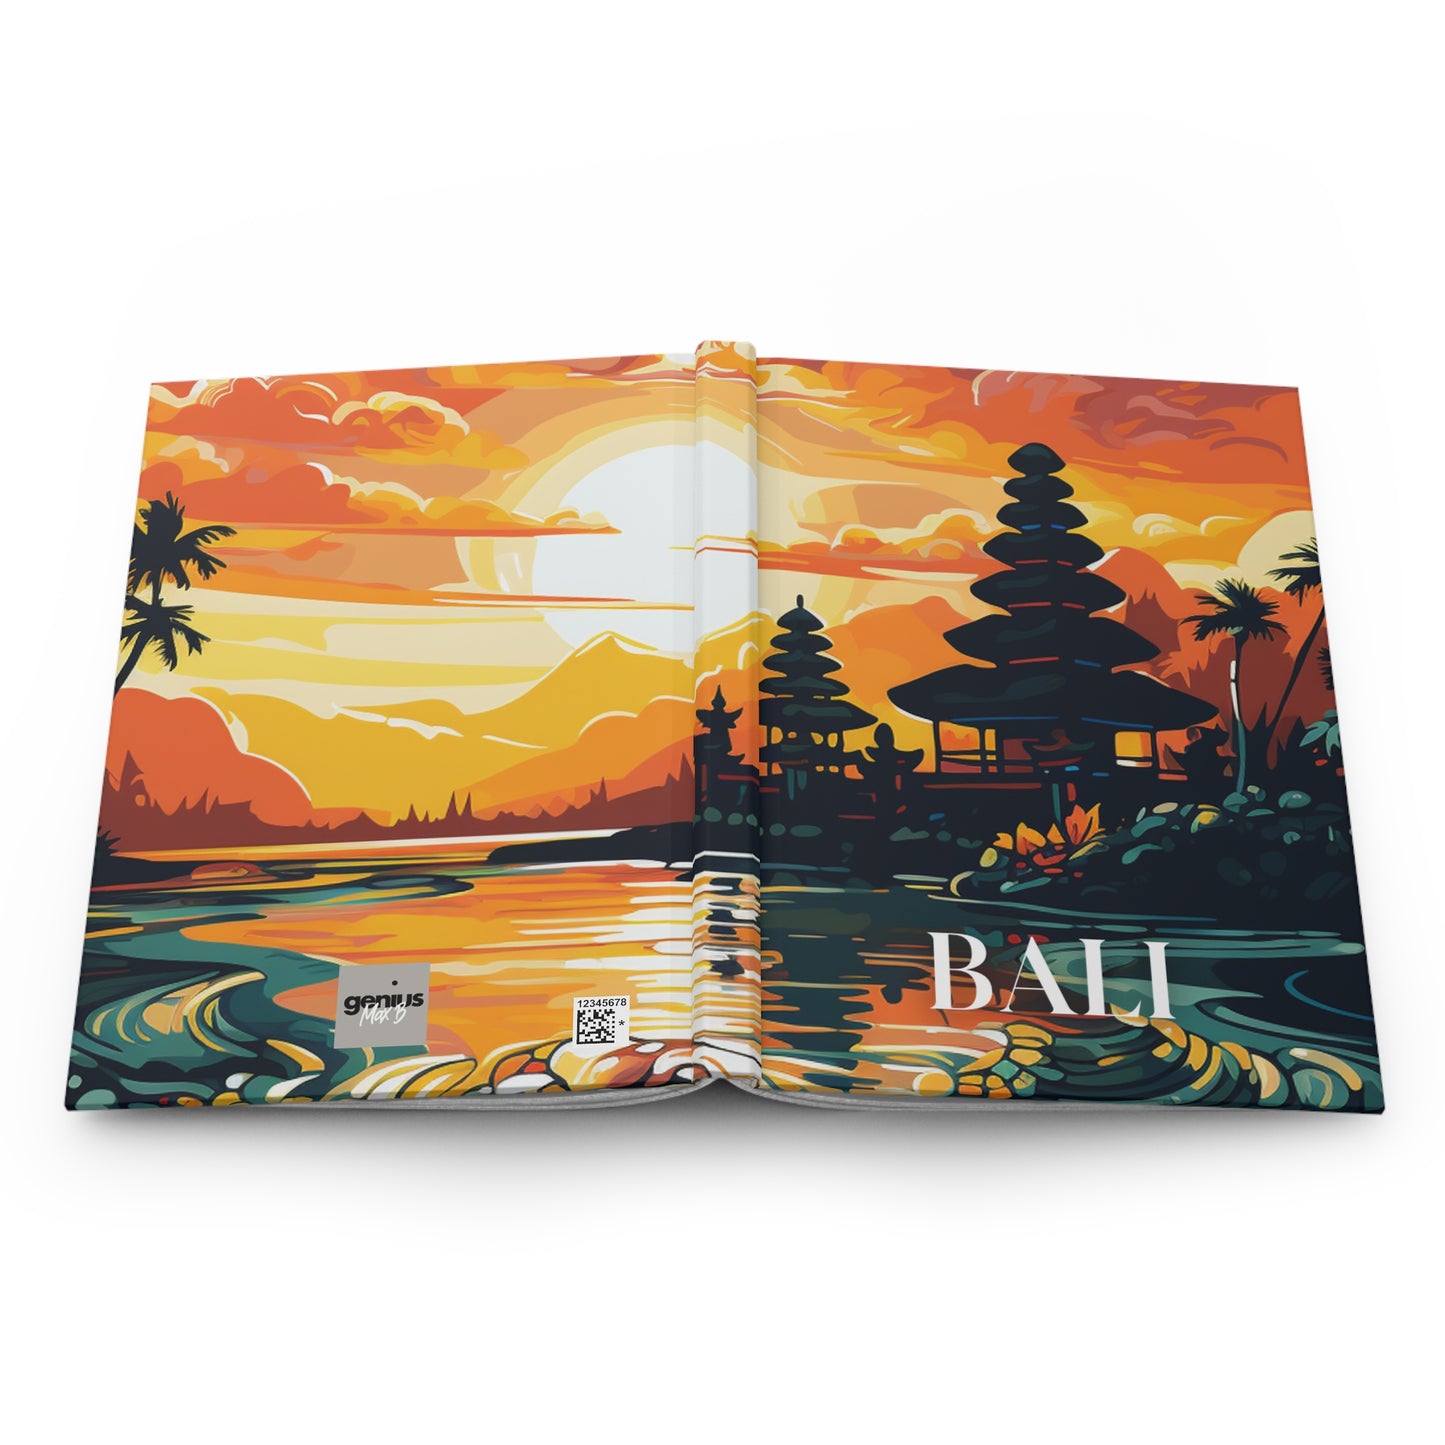 Bali Serenity - Journal